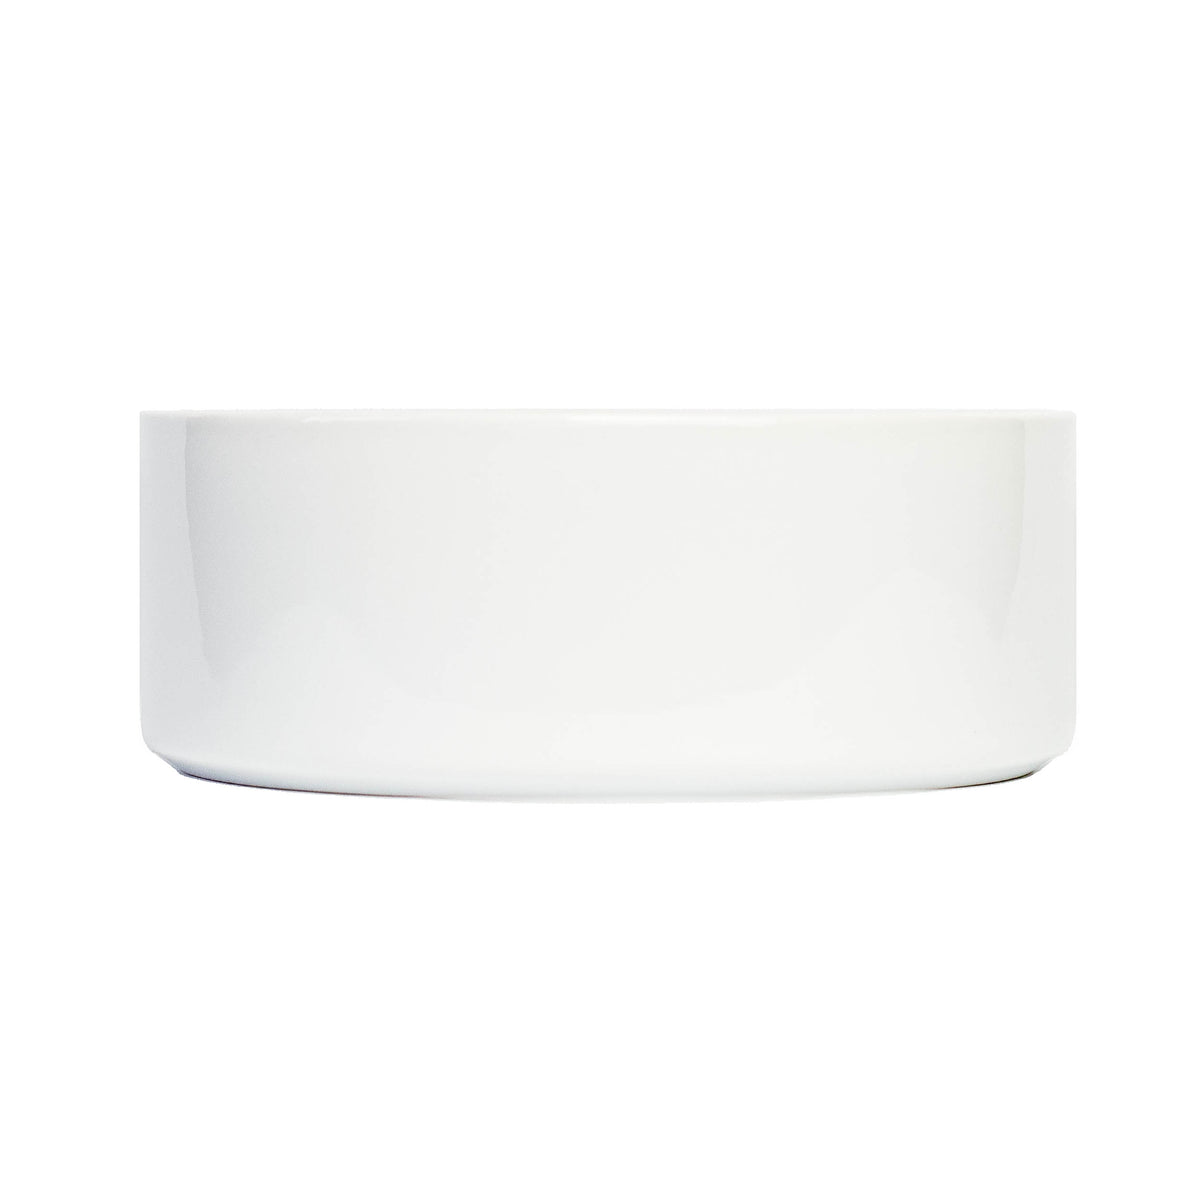 Personalised bowl for dogs / ceramic - 22oz 650ml (design 6)